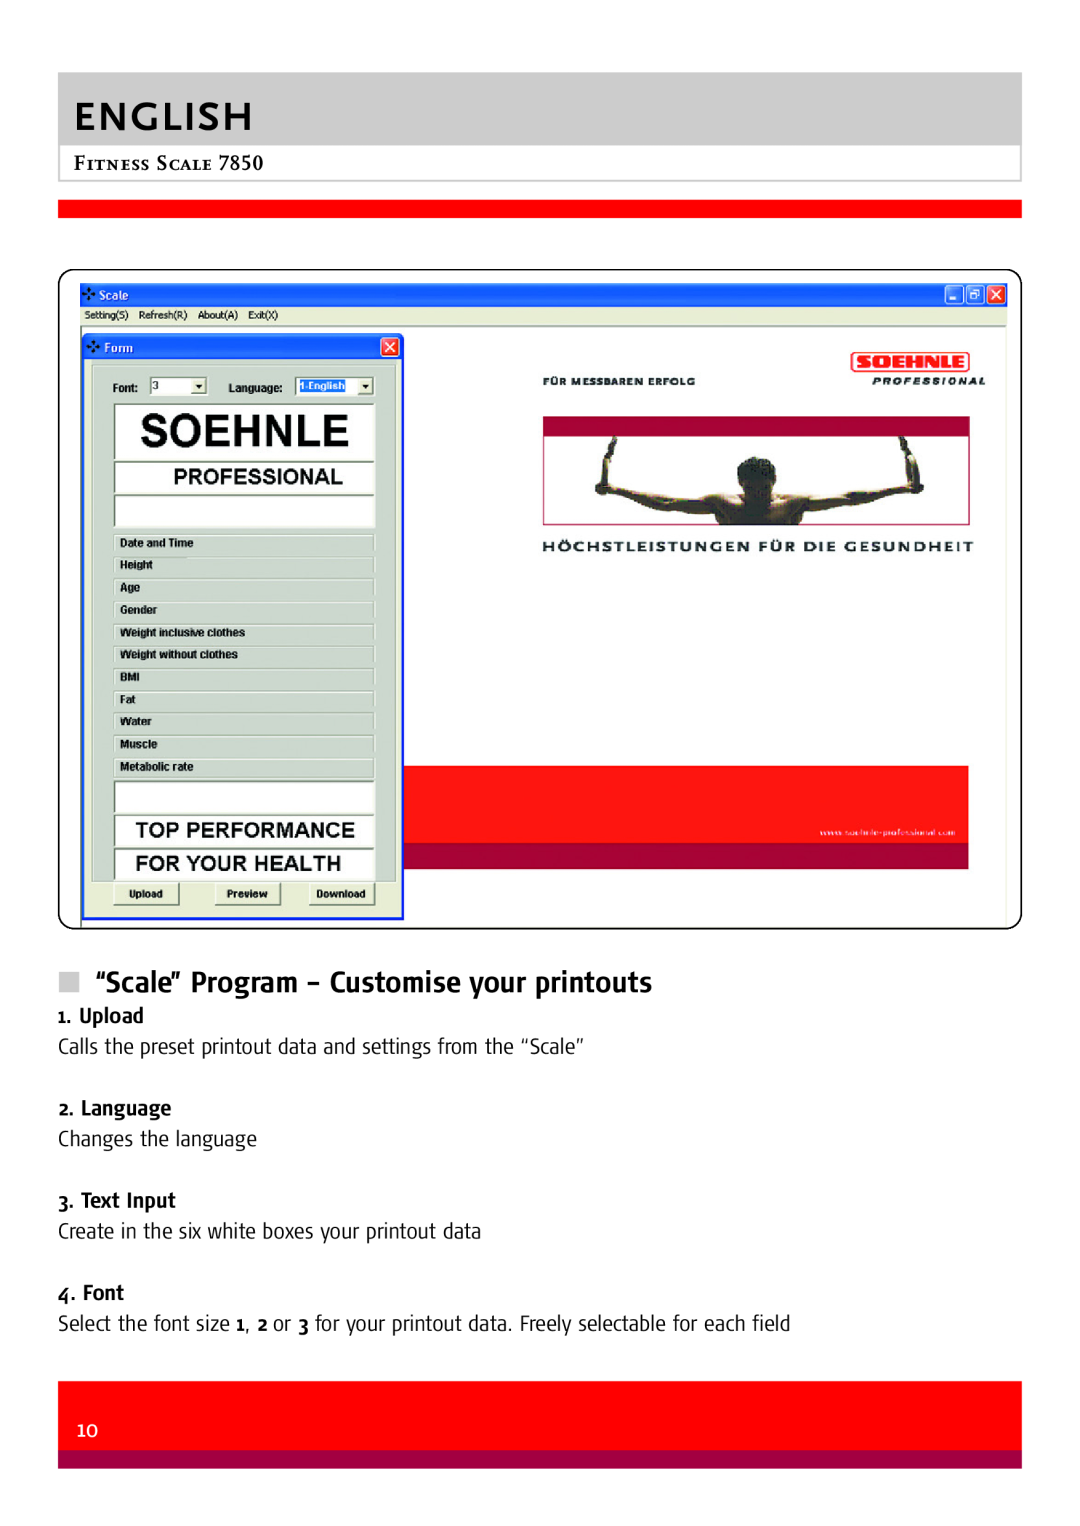 Soehnle 7850 manual “Scale” Program - Customise your printouts, Upload, Language Changes the language 3. Text Input, Font 